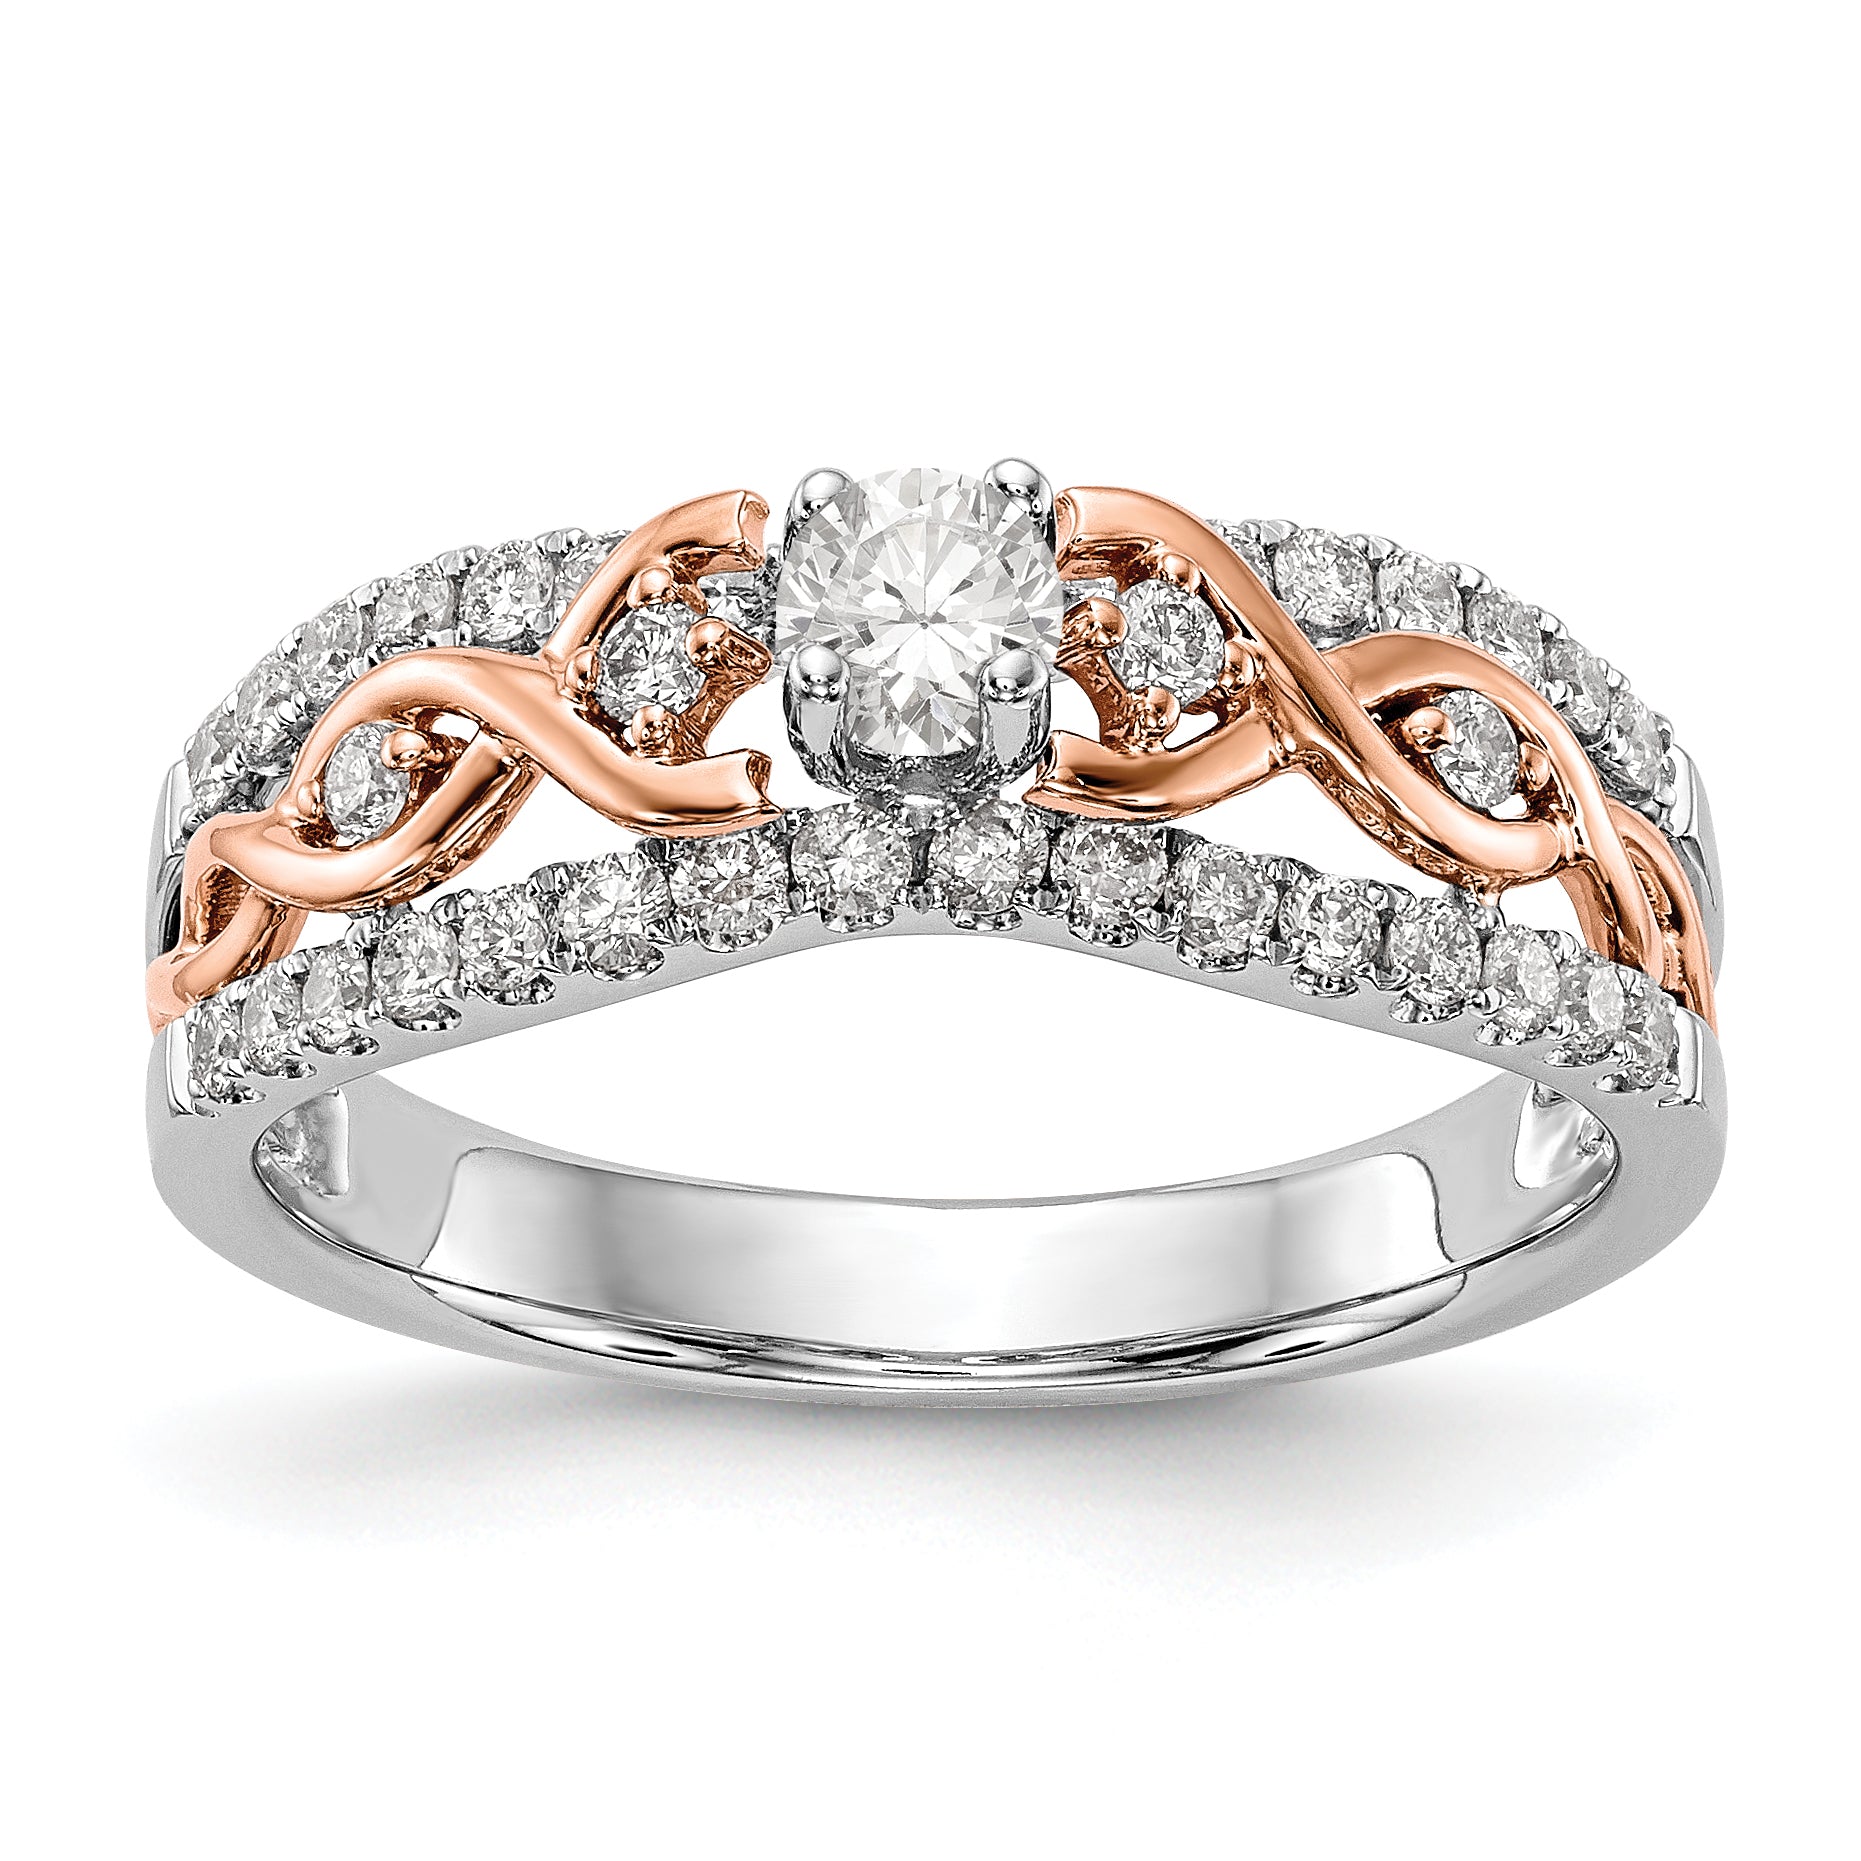 Image of ID 1 14k White Gold and Rose Gold Peg Set Diamond Engagement Ring